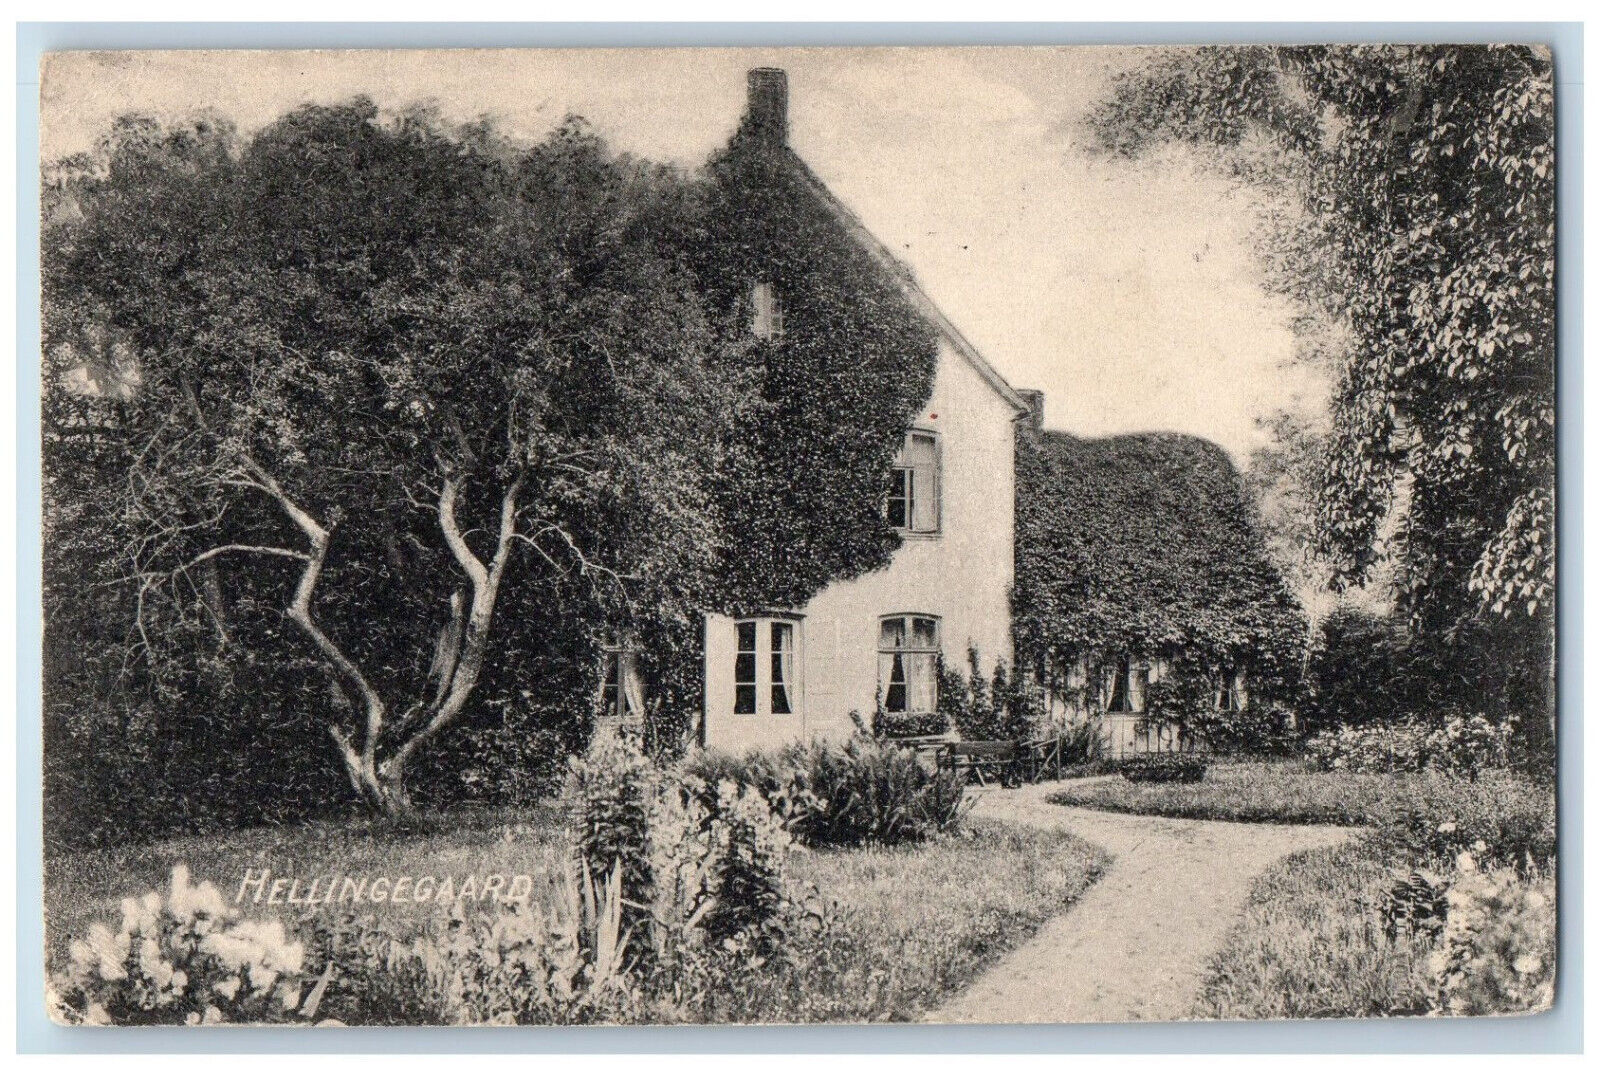 Hellingegaard Sjaelland Denmark Postcard Building Garden View c1910 Posted